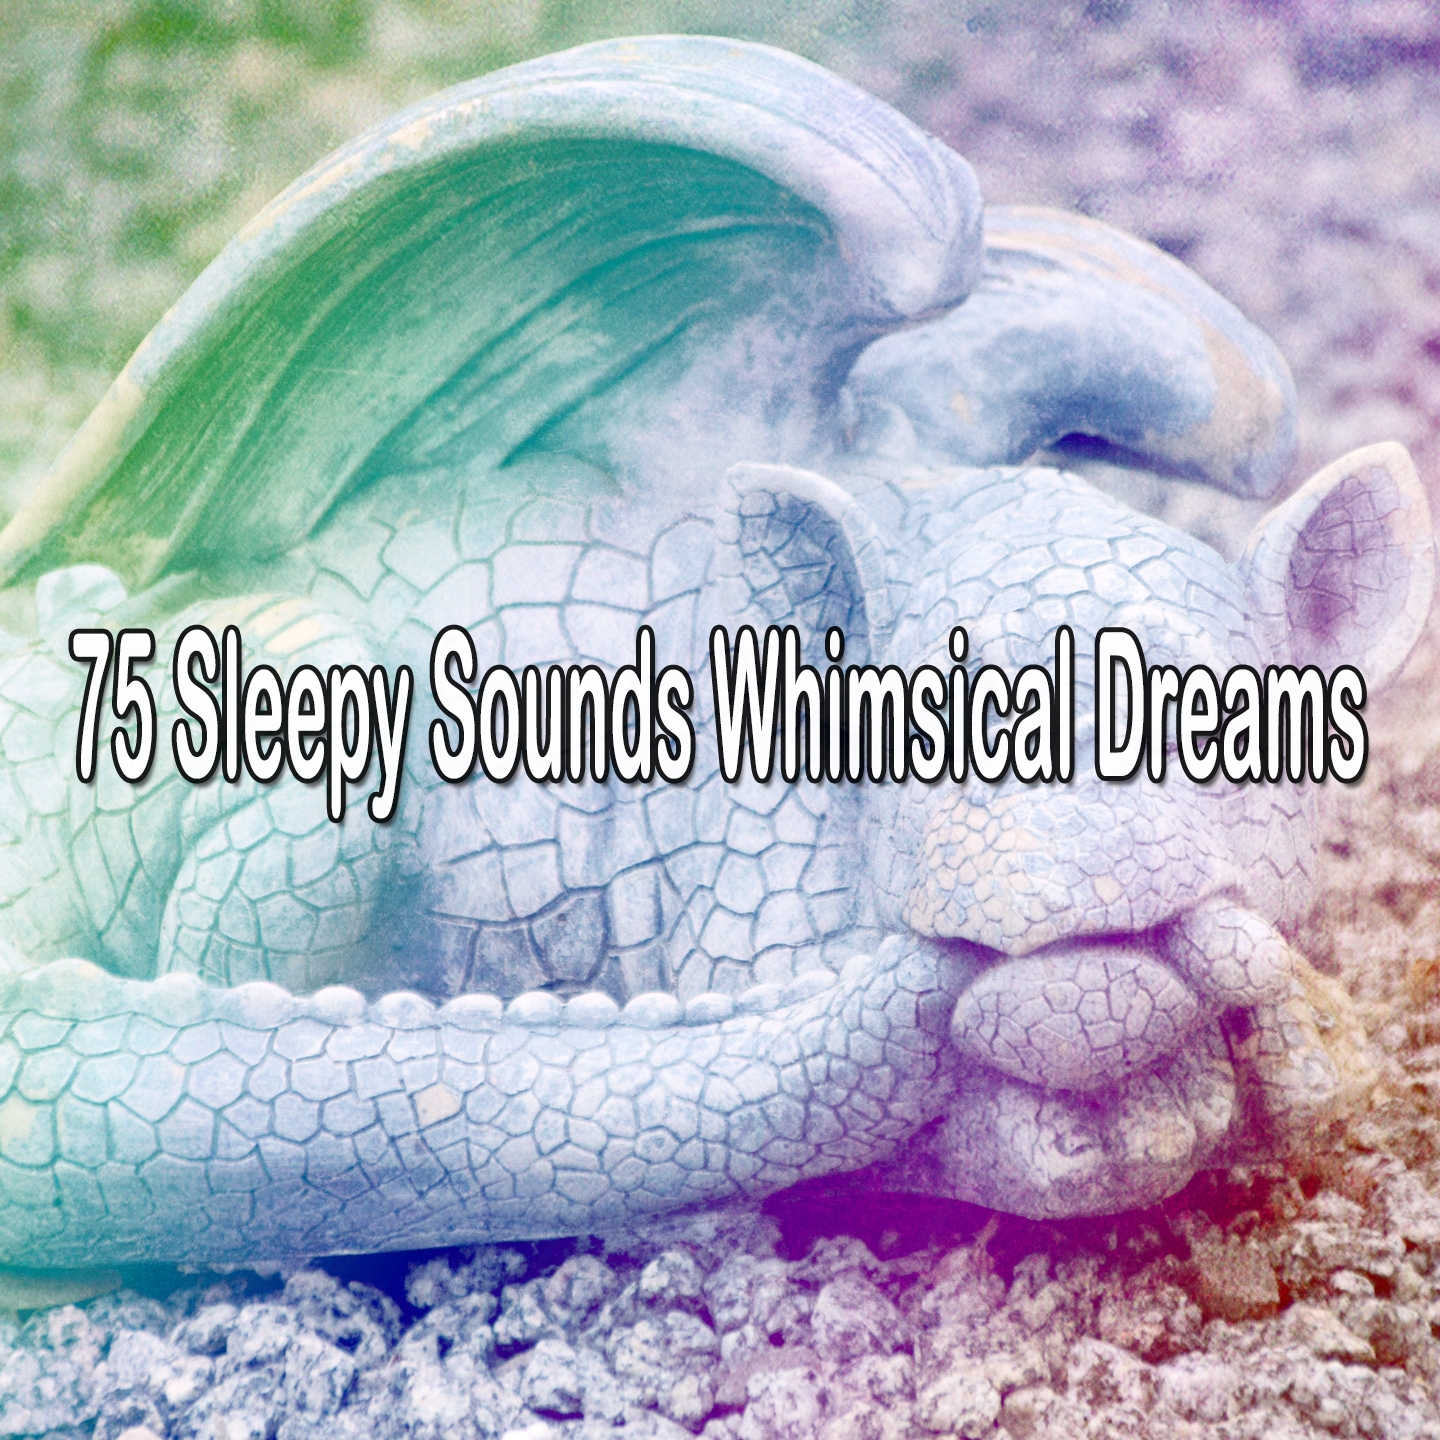 75 Sleepy Sounds Whimsical Dreams